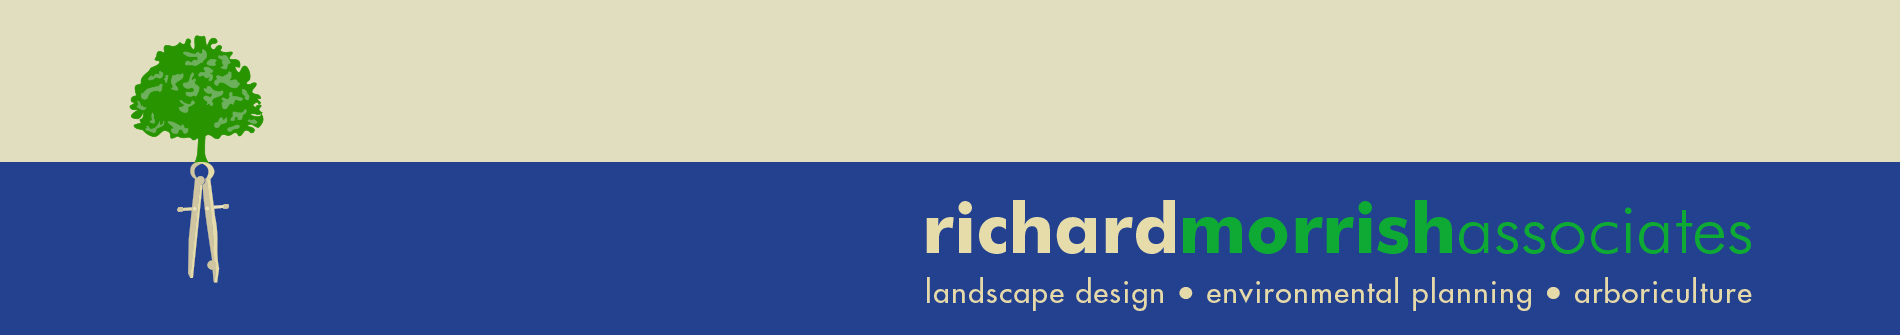 Richard Morrish Associates Logo